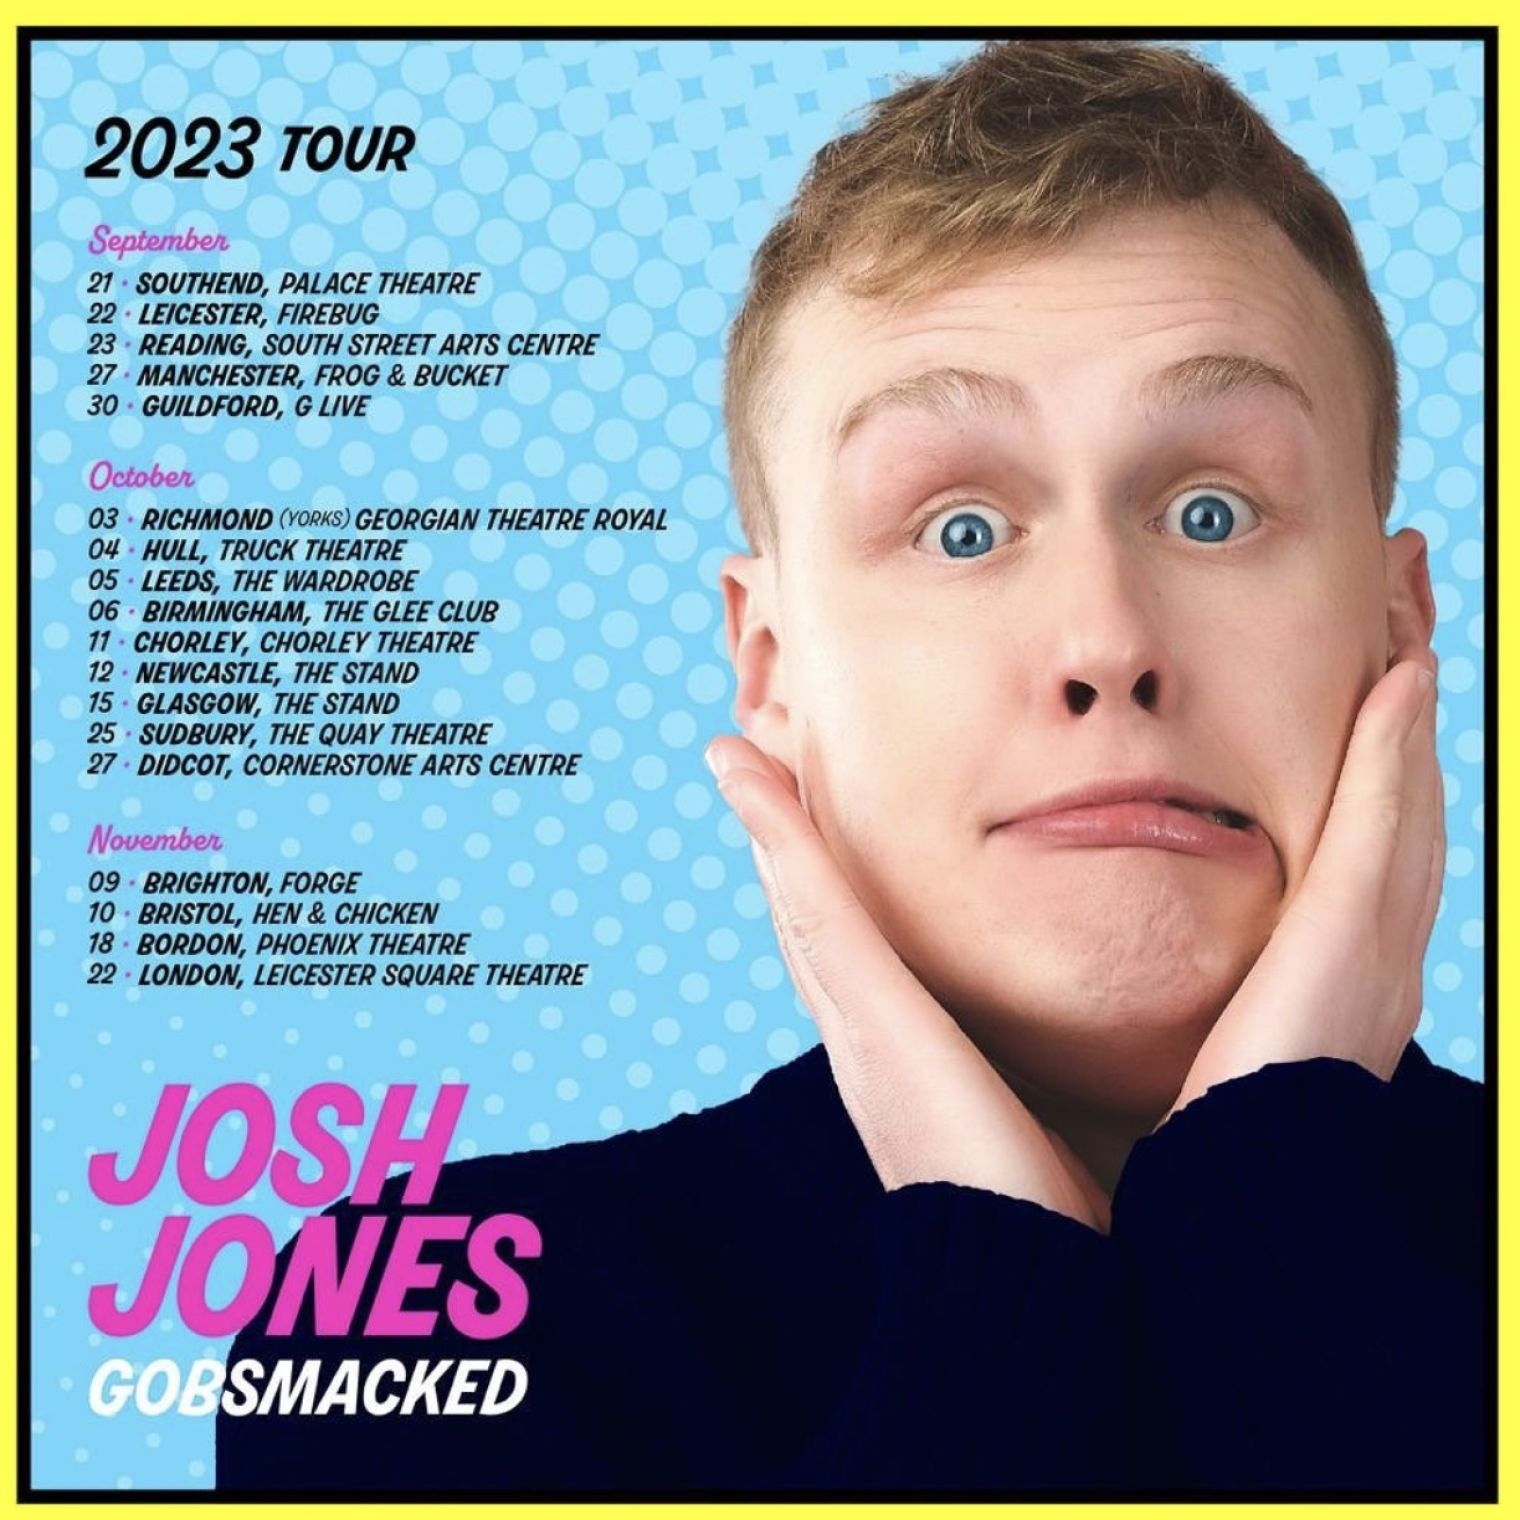 Mancunian comedian Josh Jones starts his UK tour ‘Gobsmacked’ this week